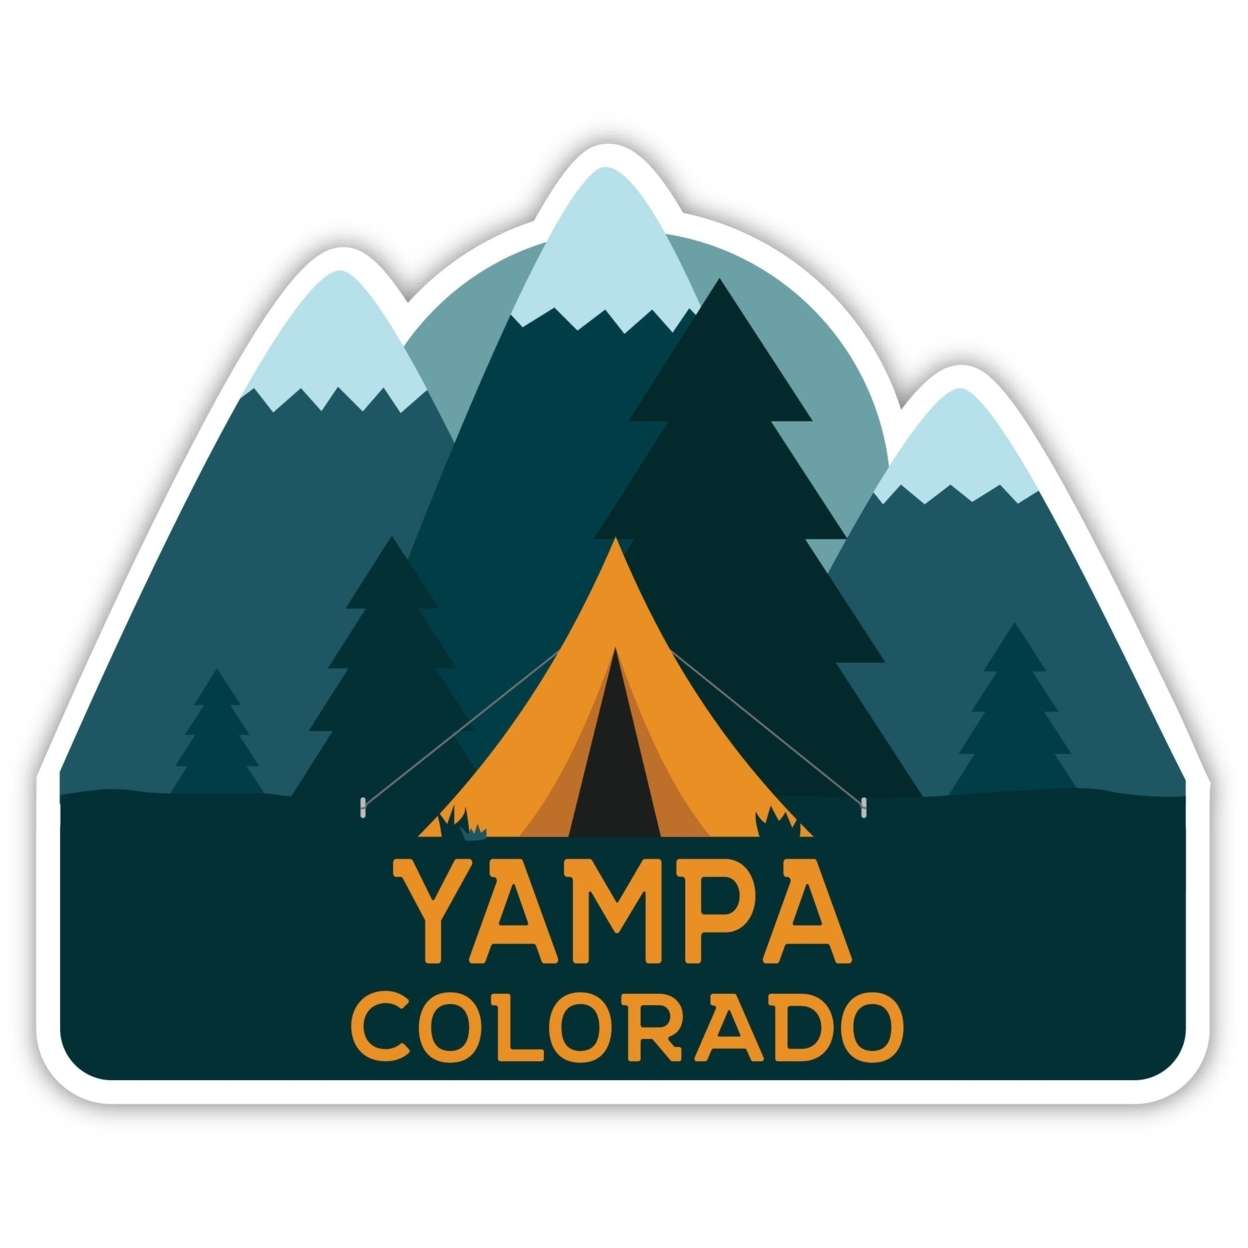 Yampa Colorado Souvenir Decorative Stickers (Choose Theme And Size) - Single Unit, 4-Inch, Camp Life